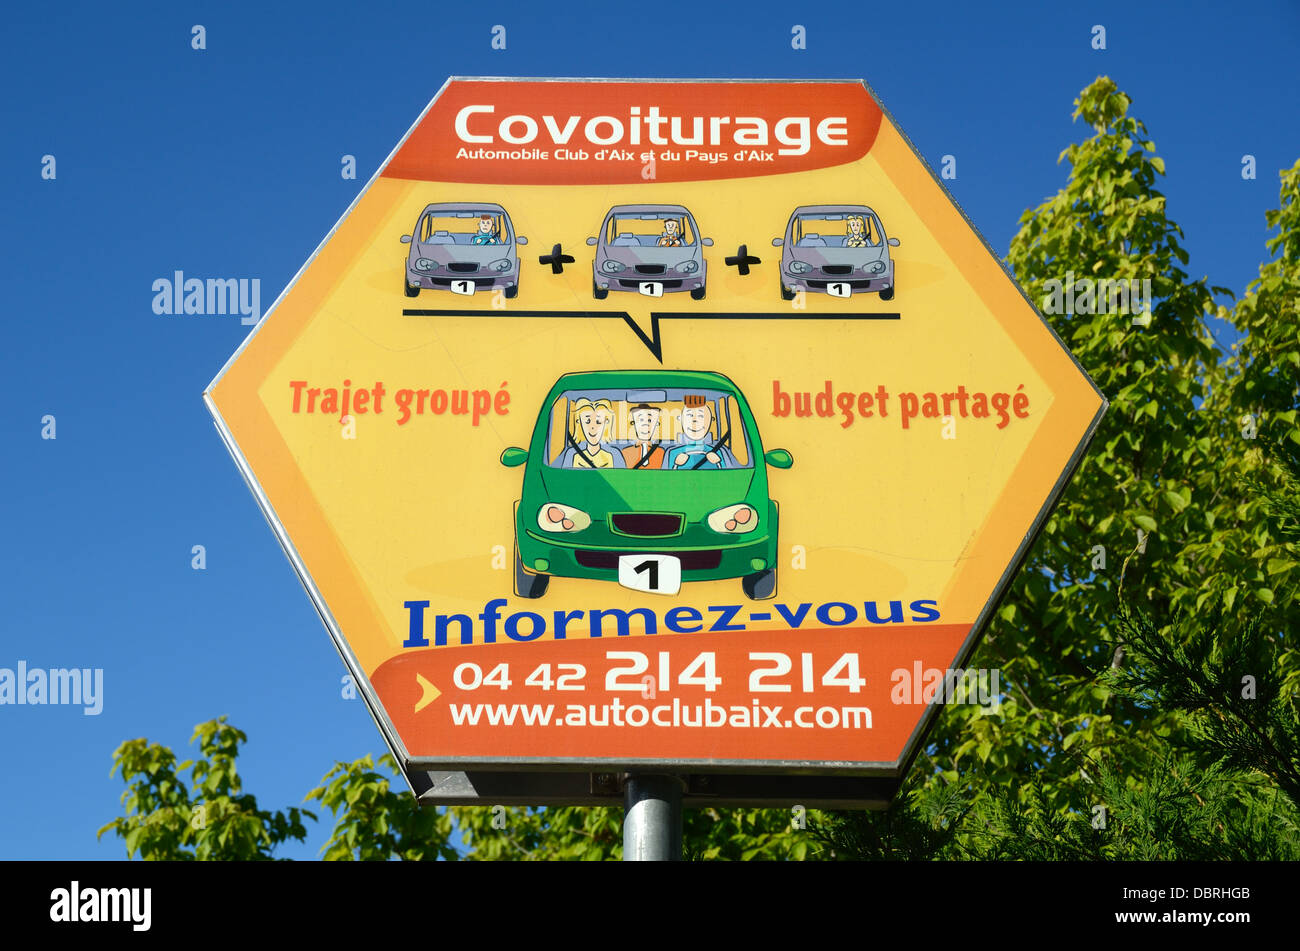 Carsharing, Car Sharing, Car-sharing, Car Share or Carpool Scheme Advertisement or Publicity Aix-en-Provence France Stock Photo